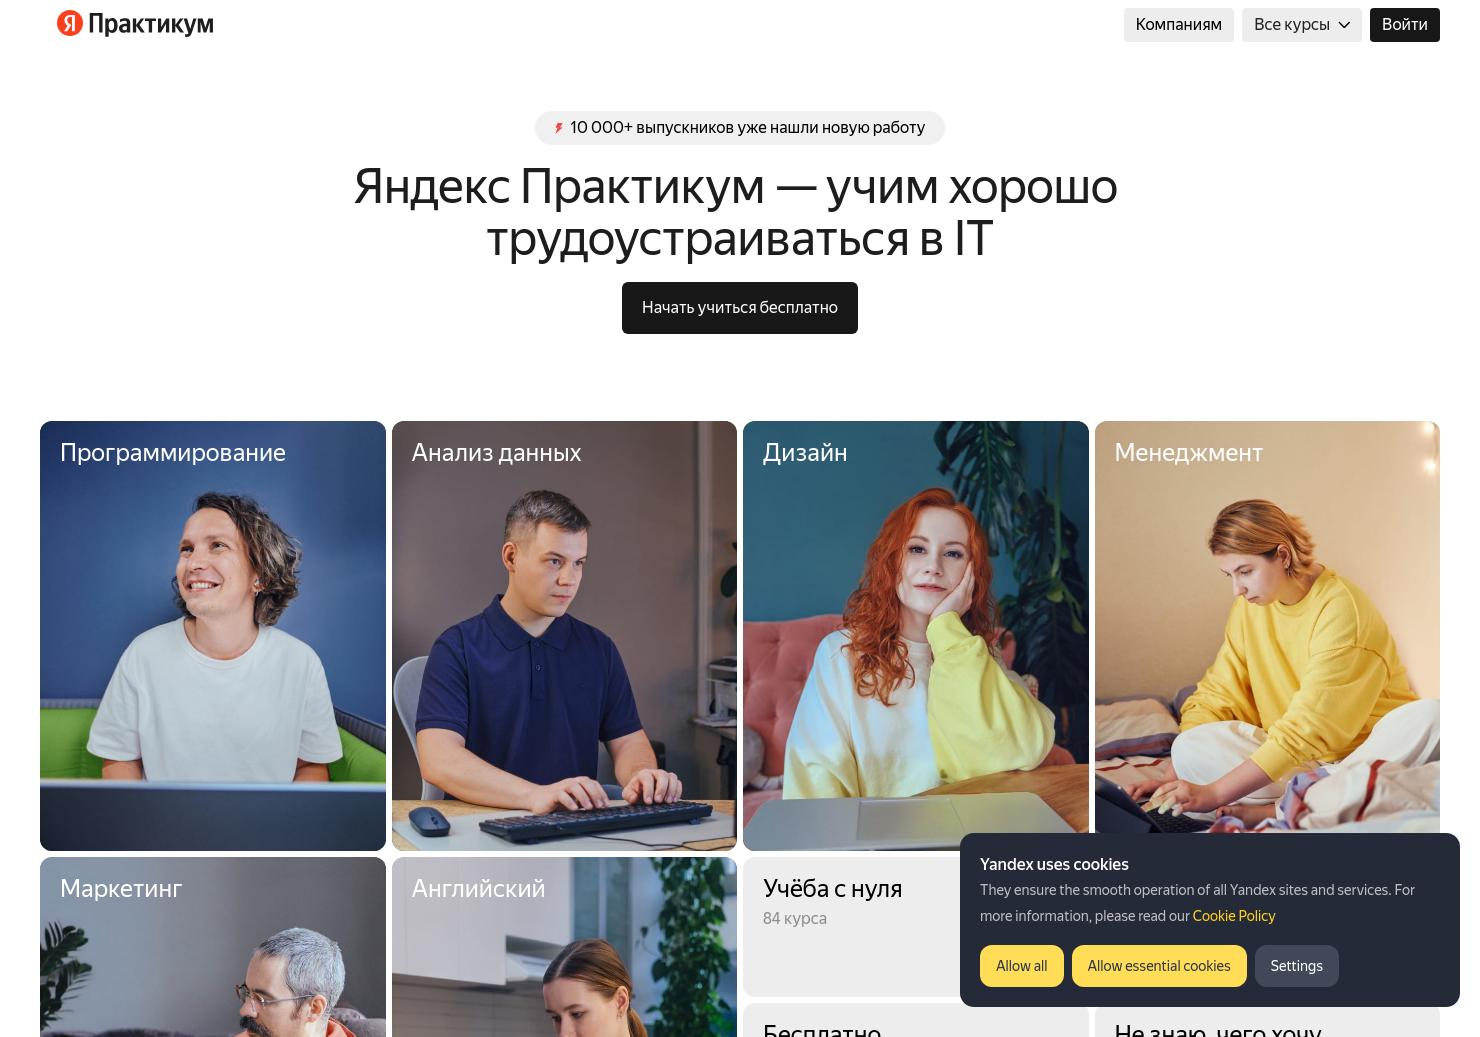 Practicum by Yandex